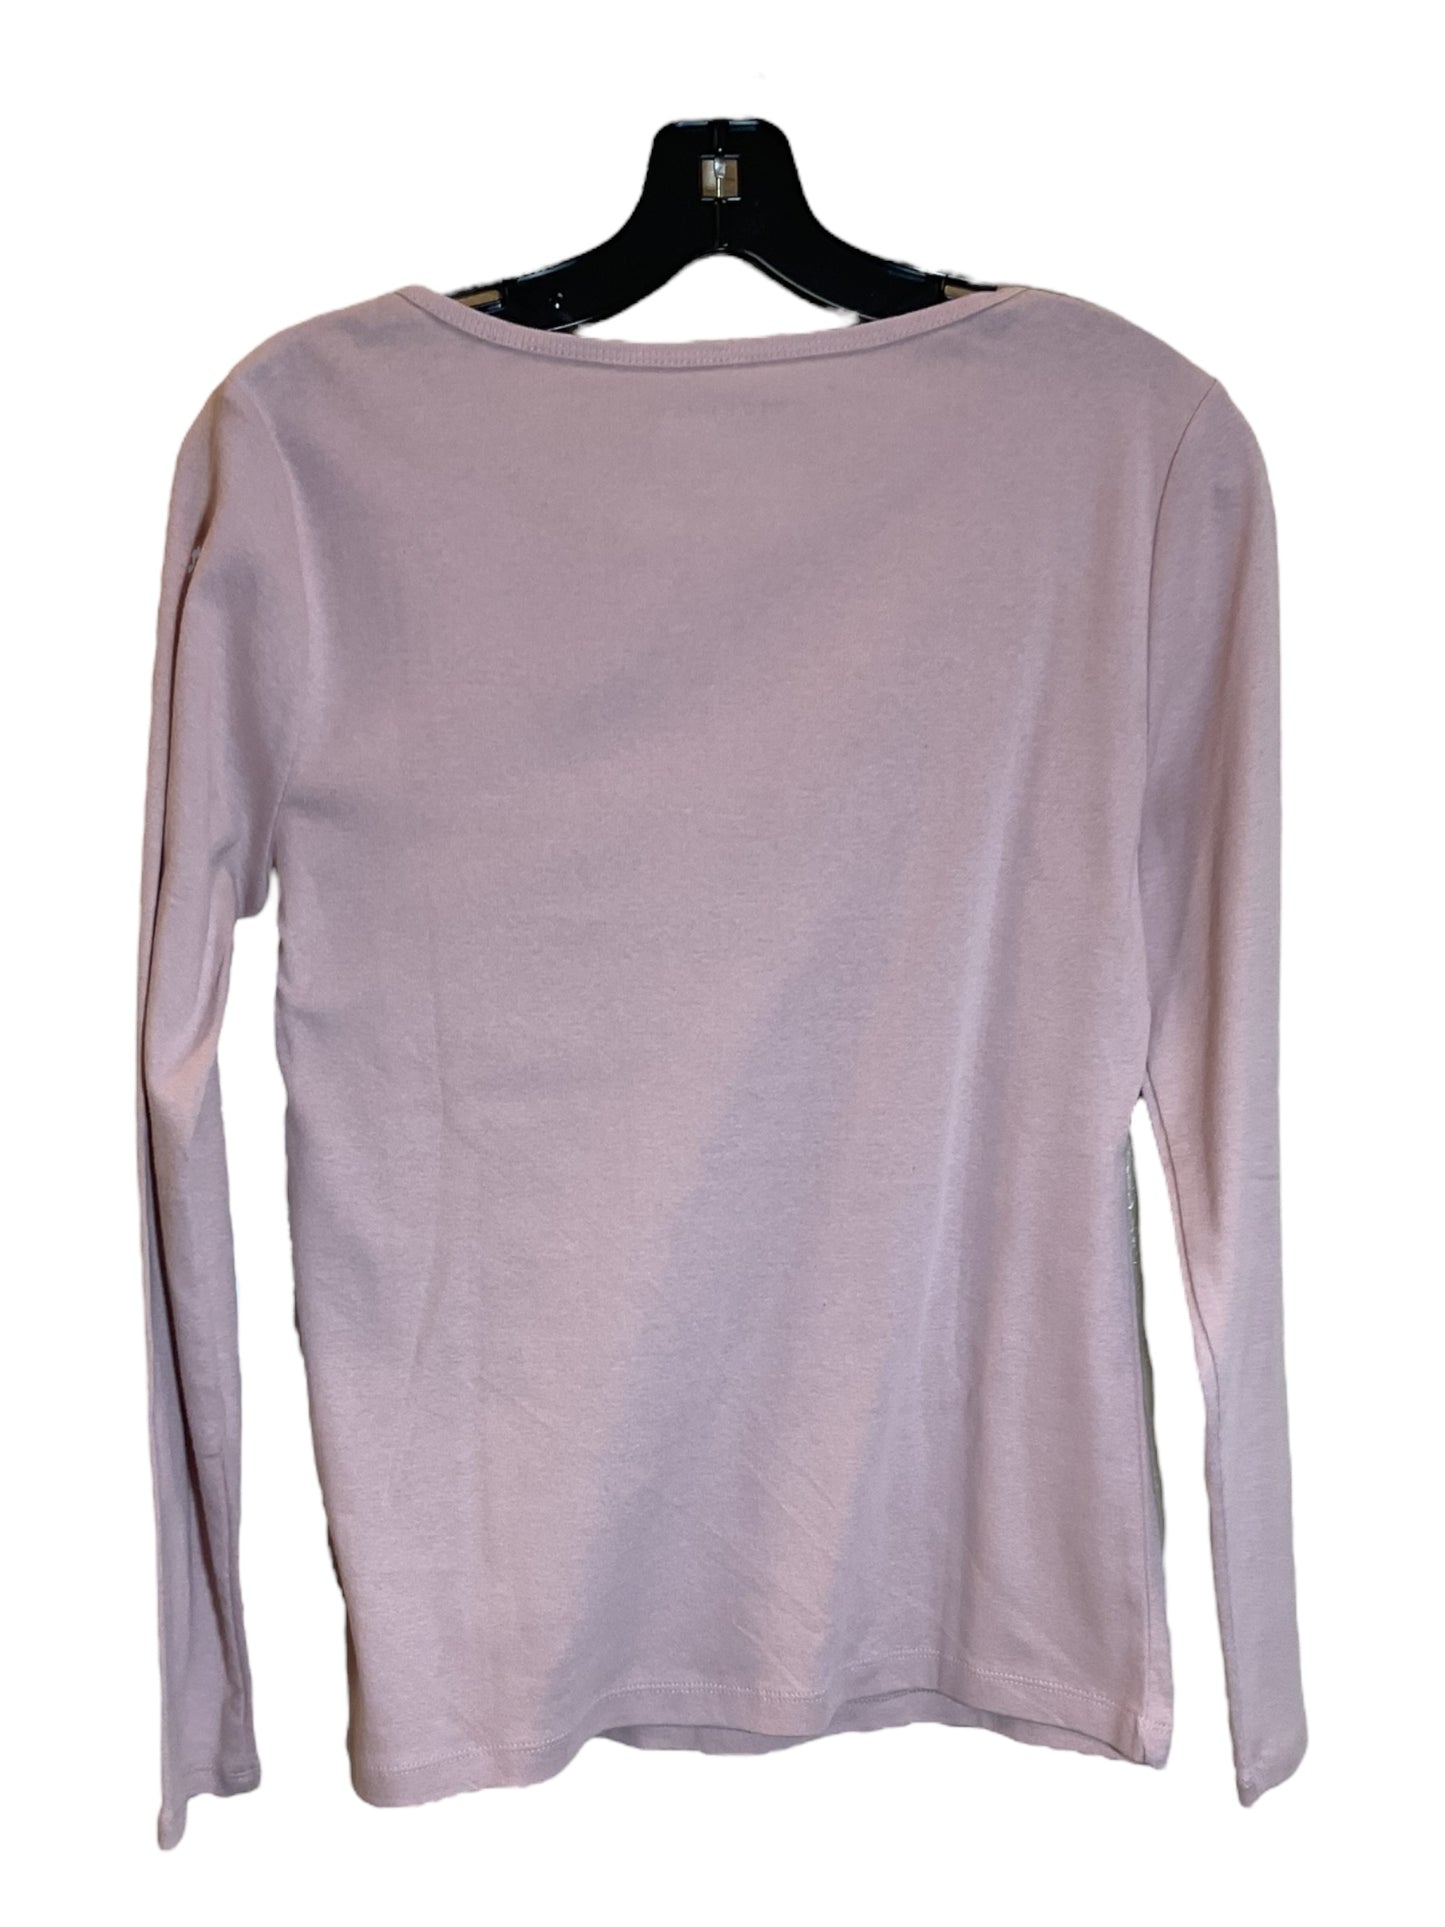 Top Long Sleeve Basic By Liz Claiborne  Size: M